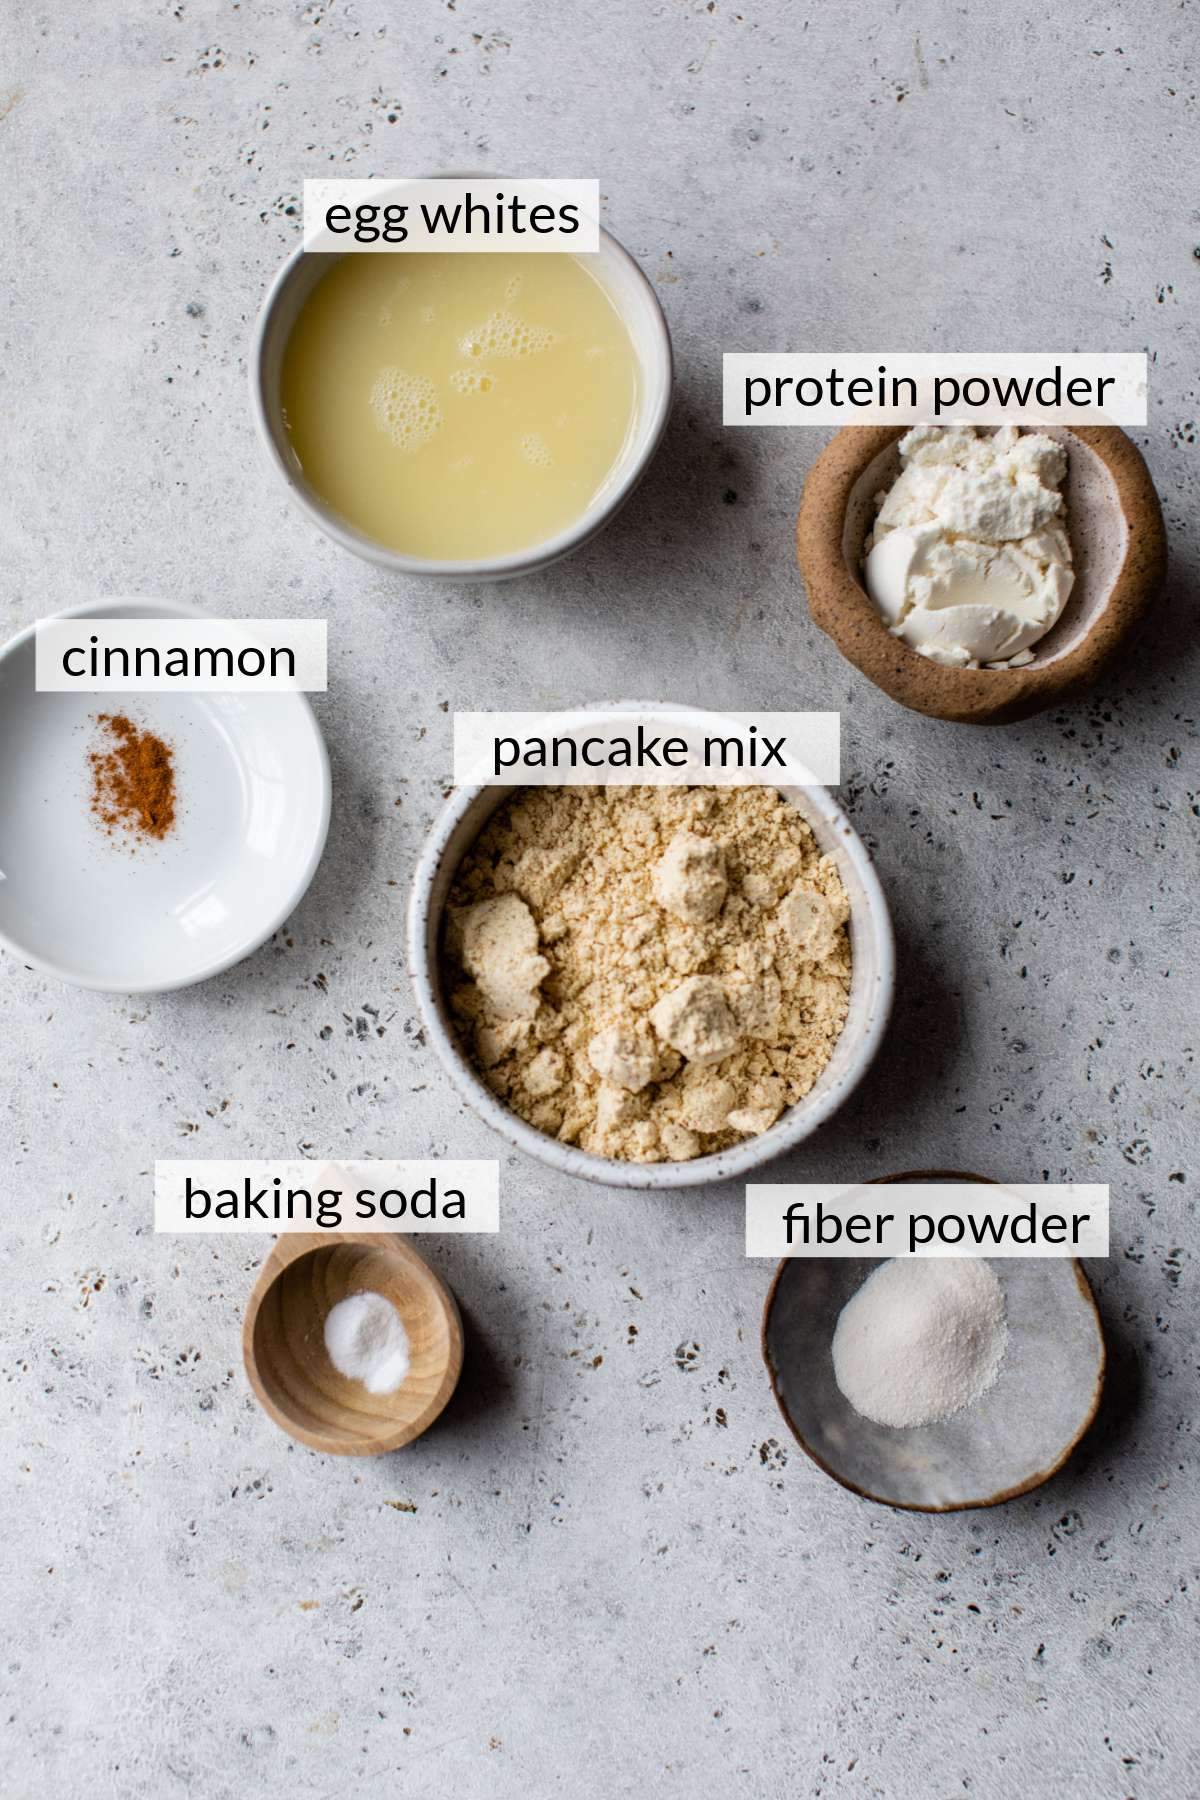 Small bowls with pancake mix, egg whites, protein powder, baking powder and cinnamon.